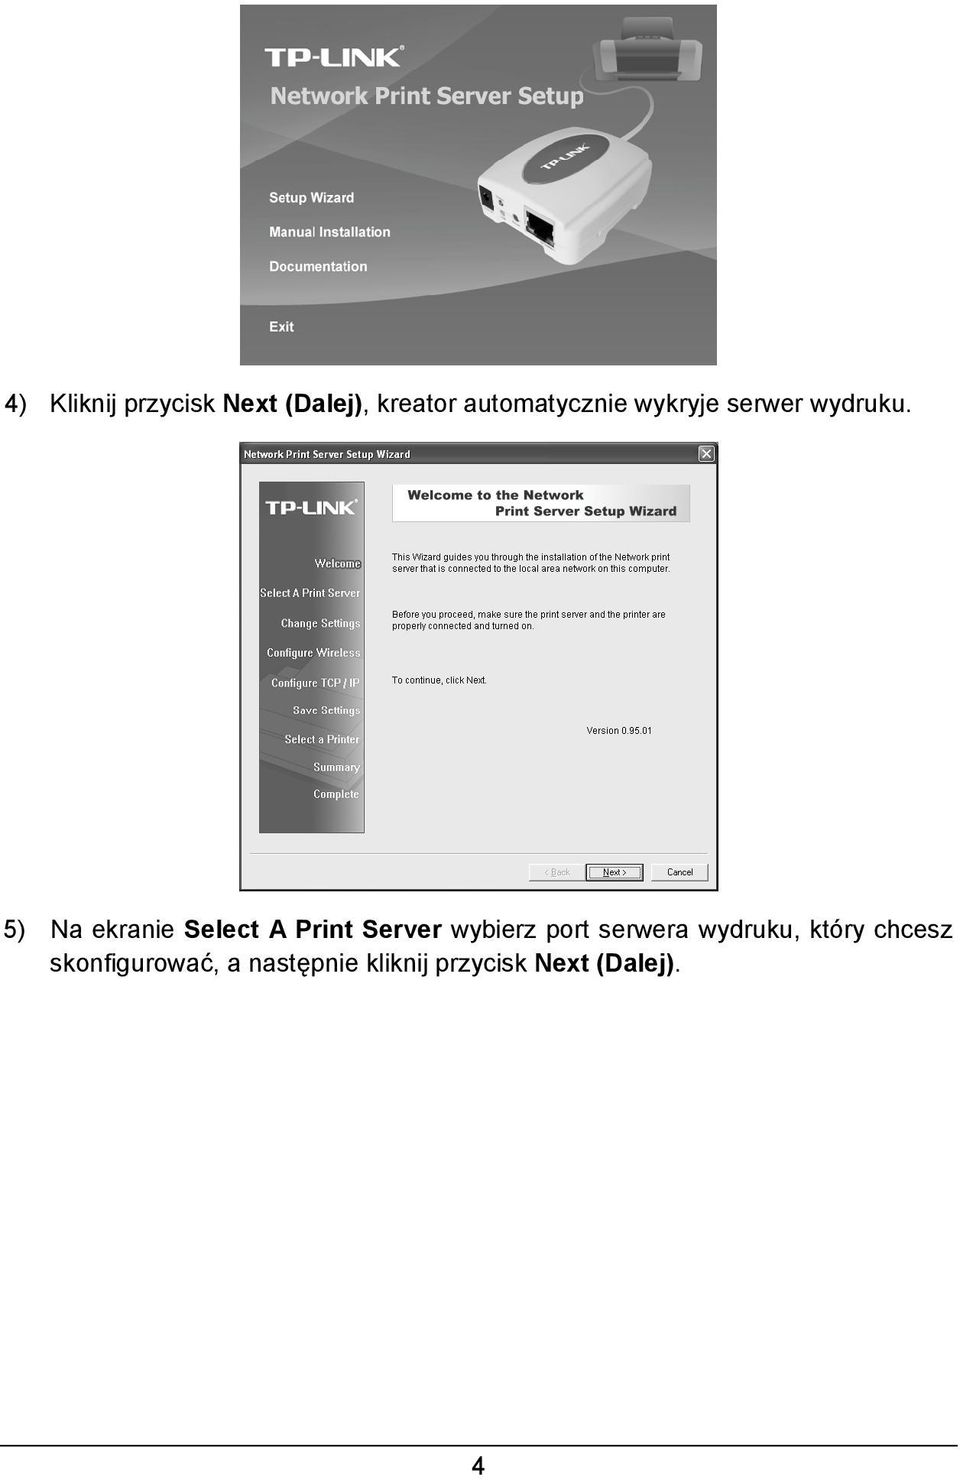 5) Na ekranie Select A Print Server wybierz port